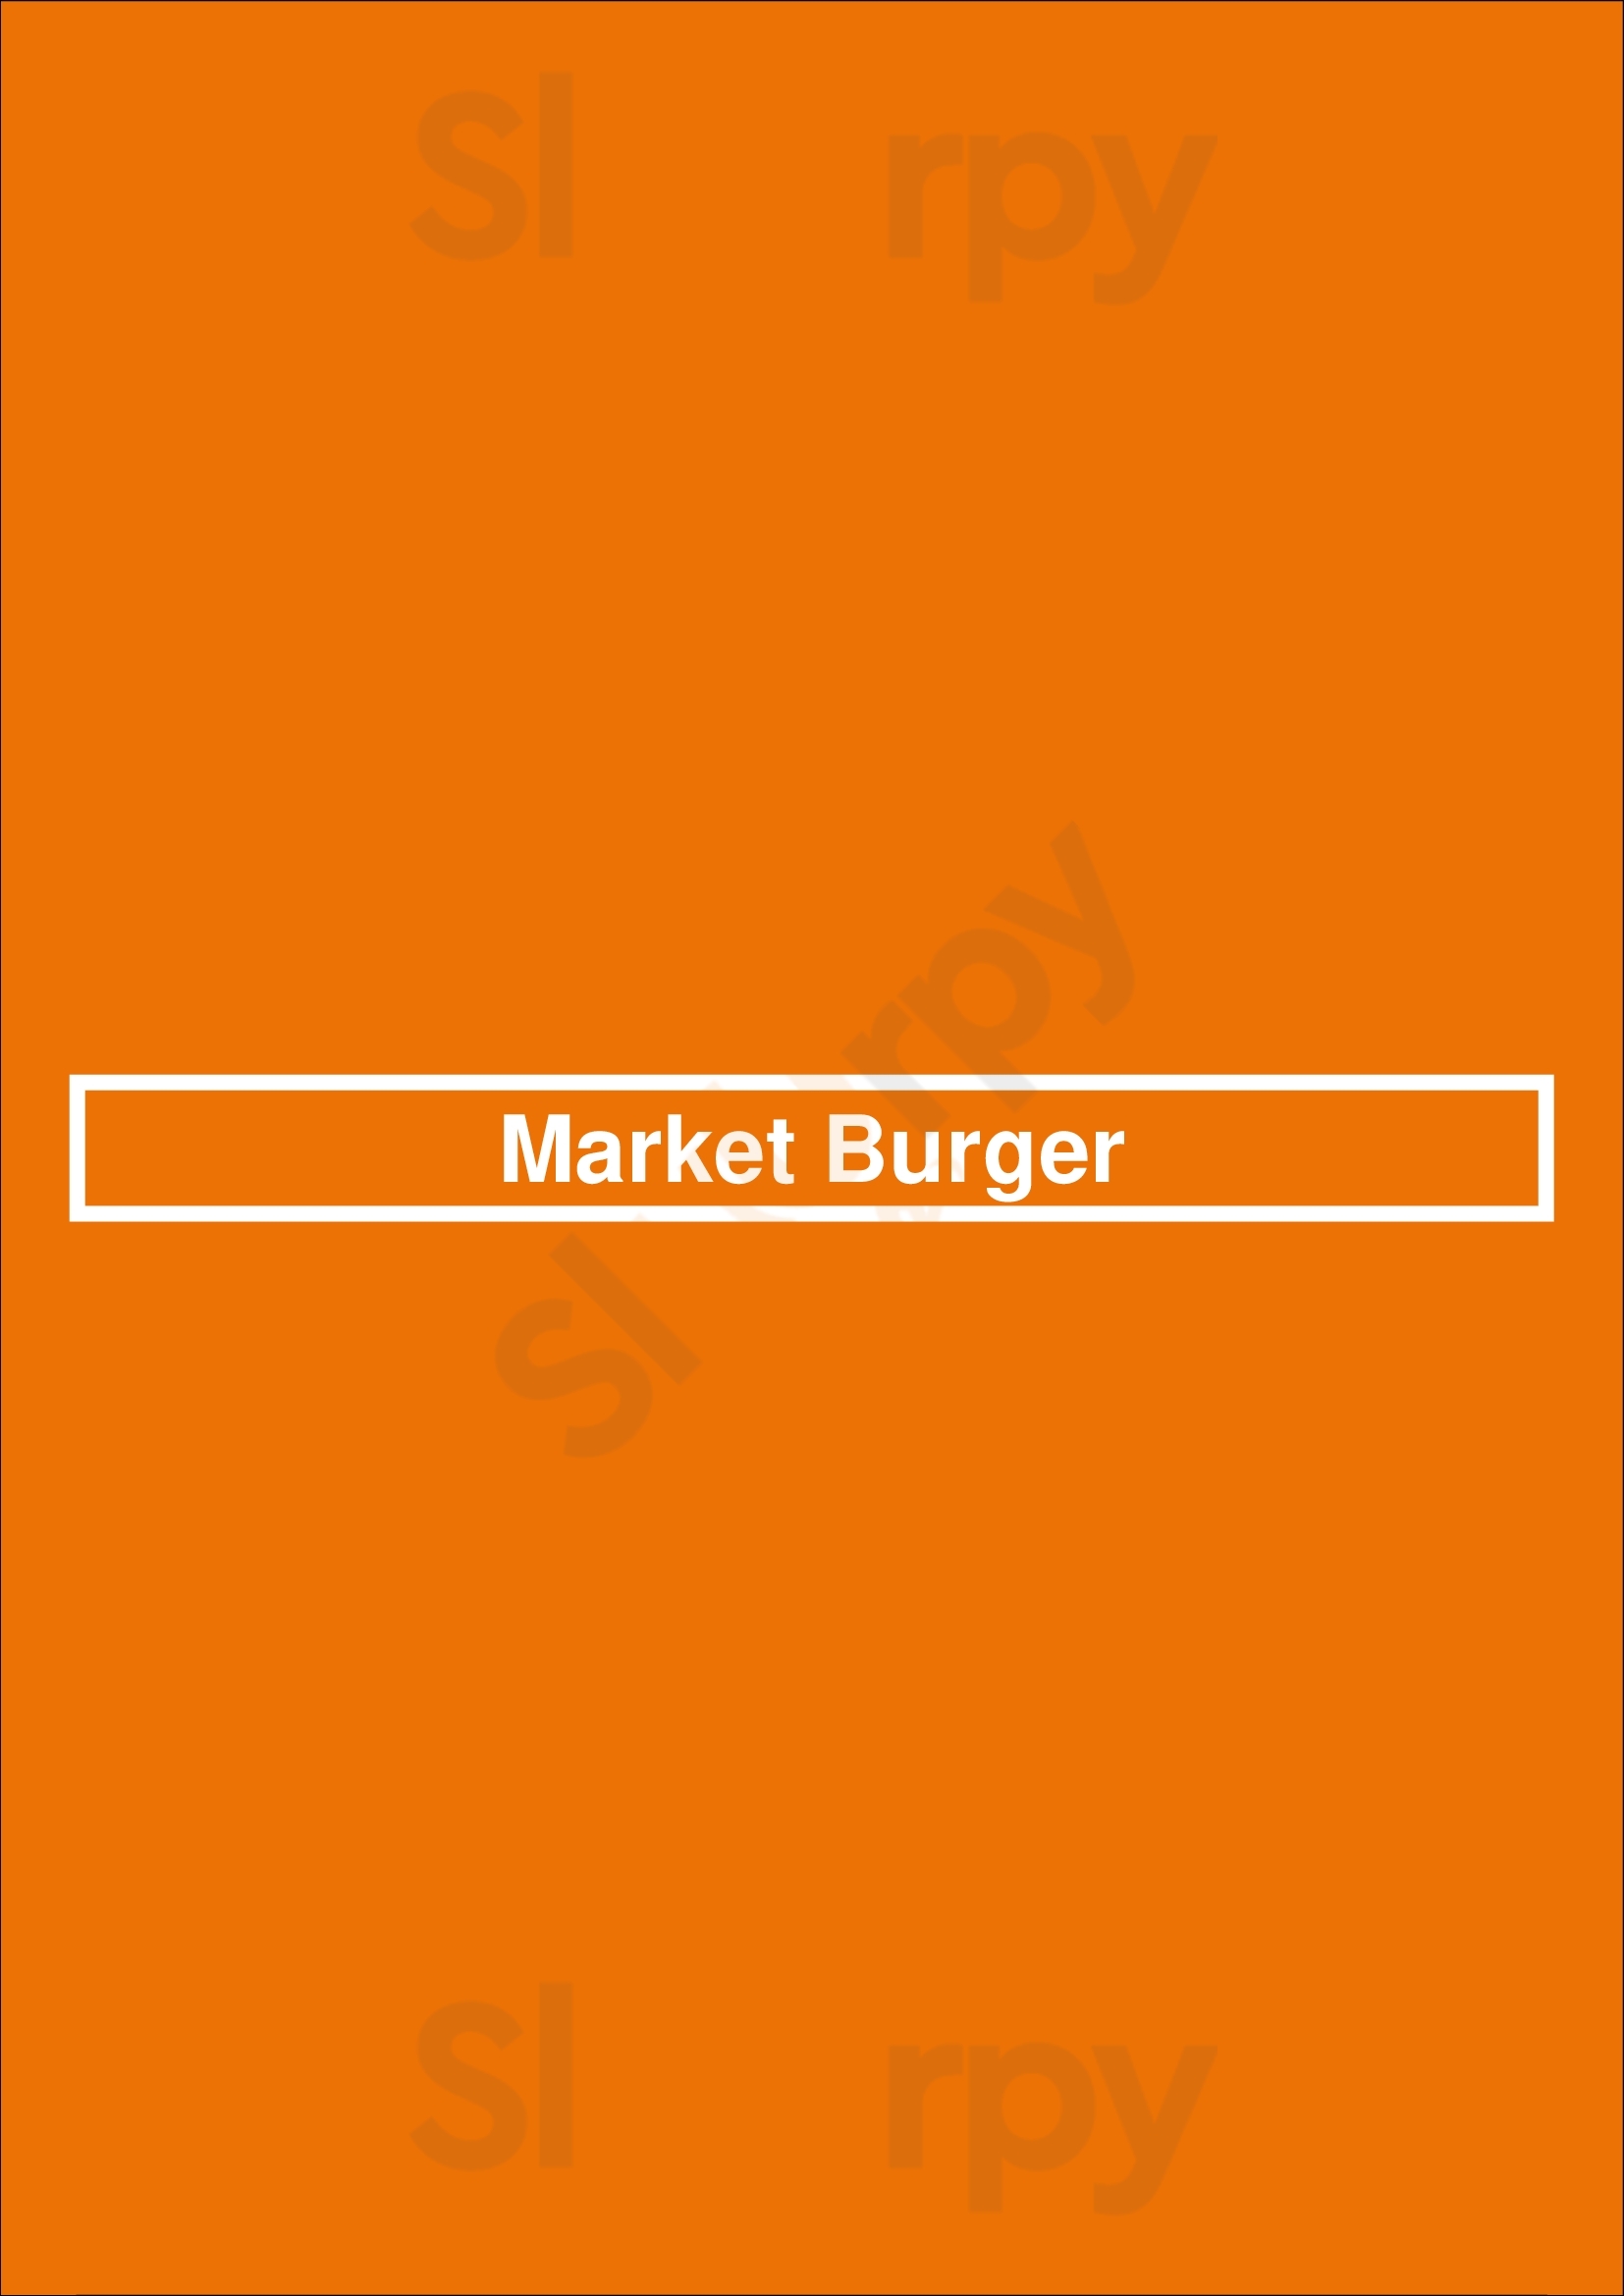 Market Burger Winnipeg Menu - 1